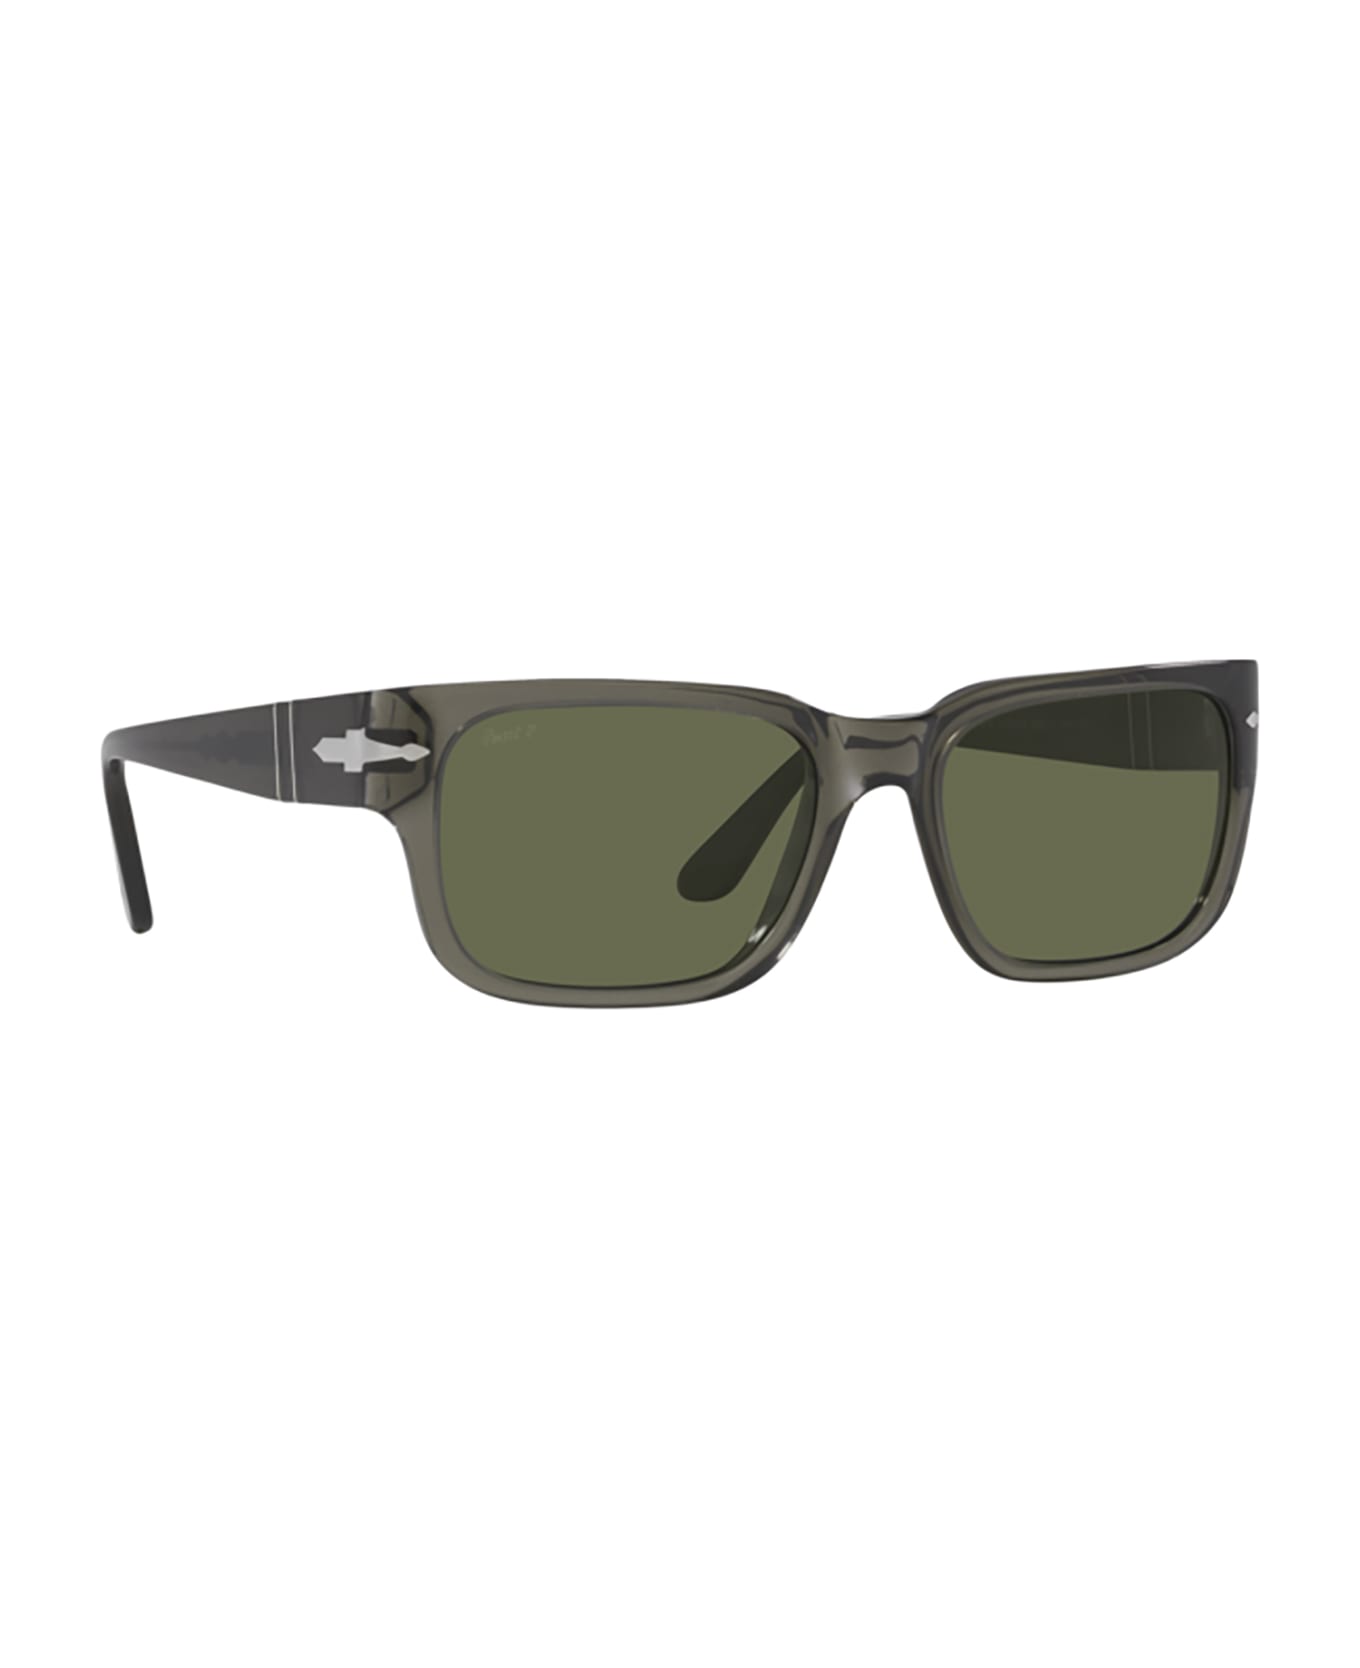 Persol Po3315s Transparent Taupe Gray Sunglasses - Transparent Taupe Gray